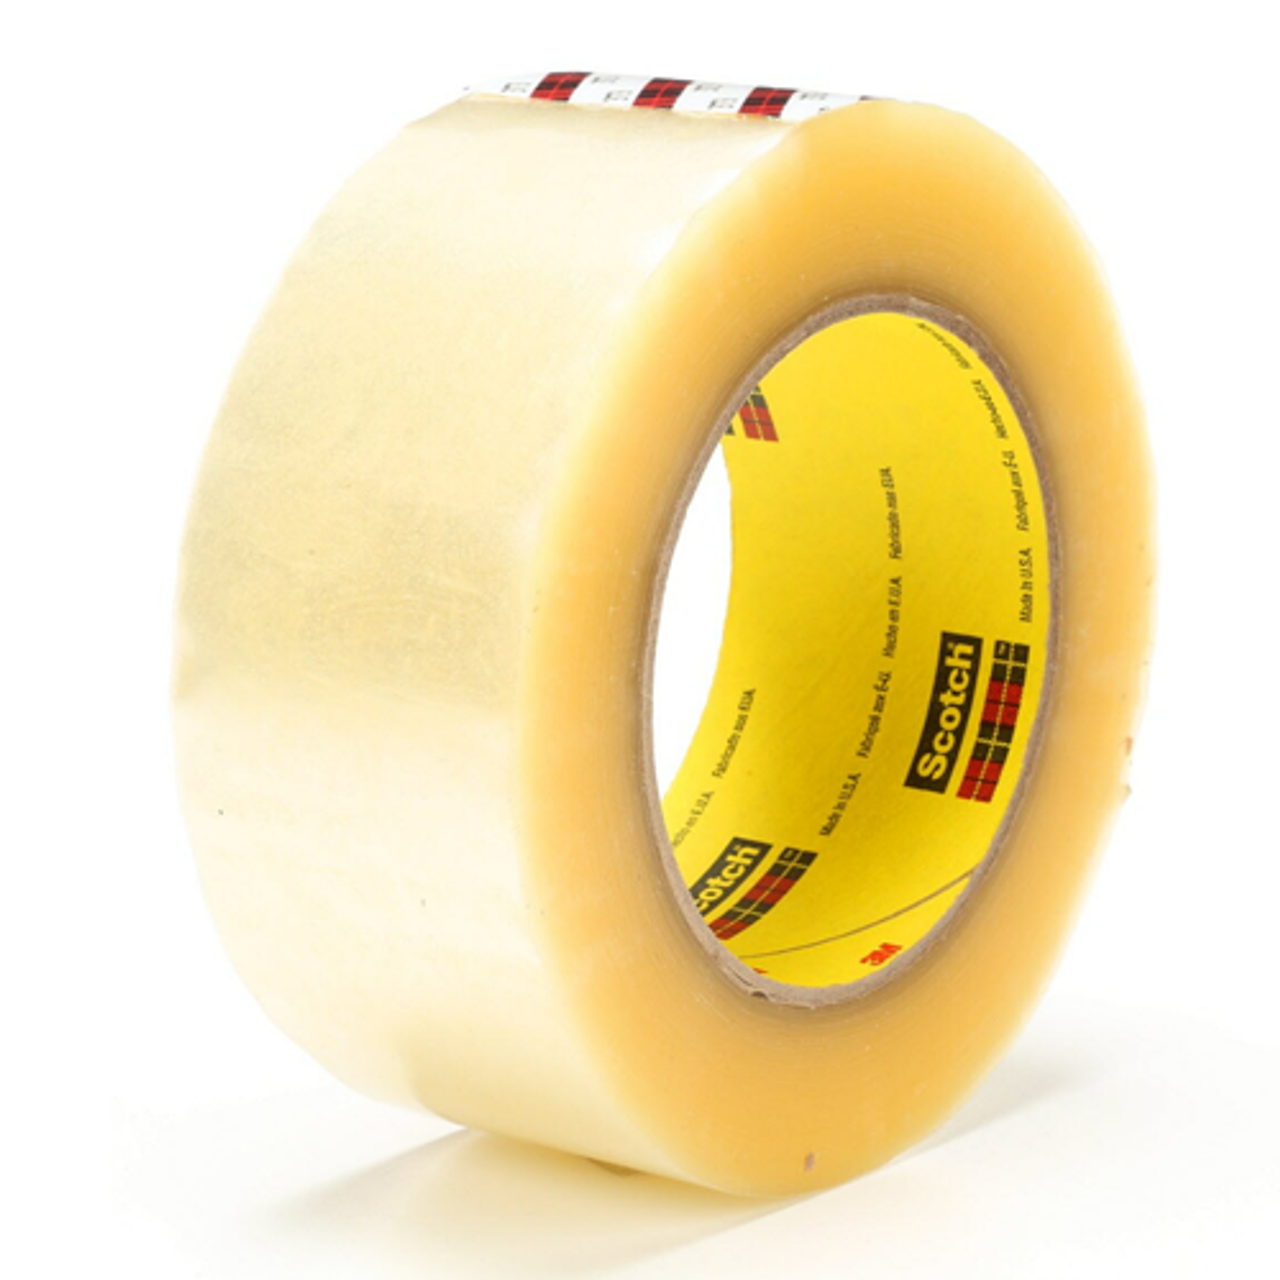 Scotch Carton Sealing Tape,Hot Melt Resin 3771, 1 - City Market